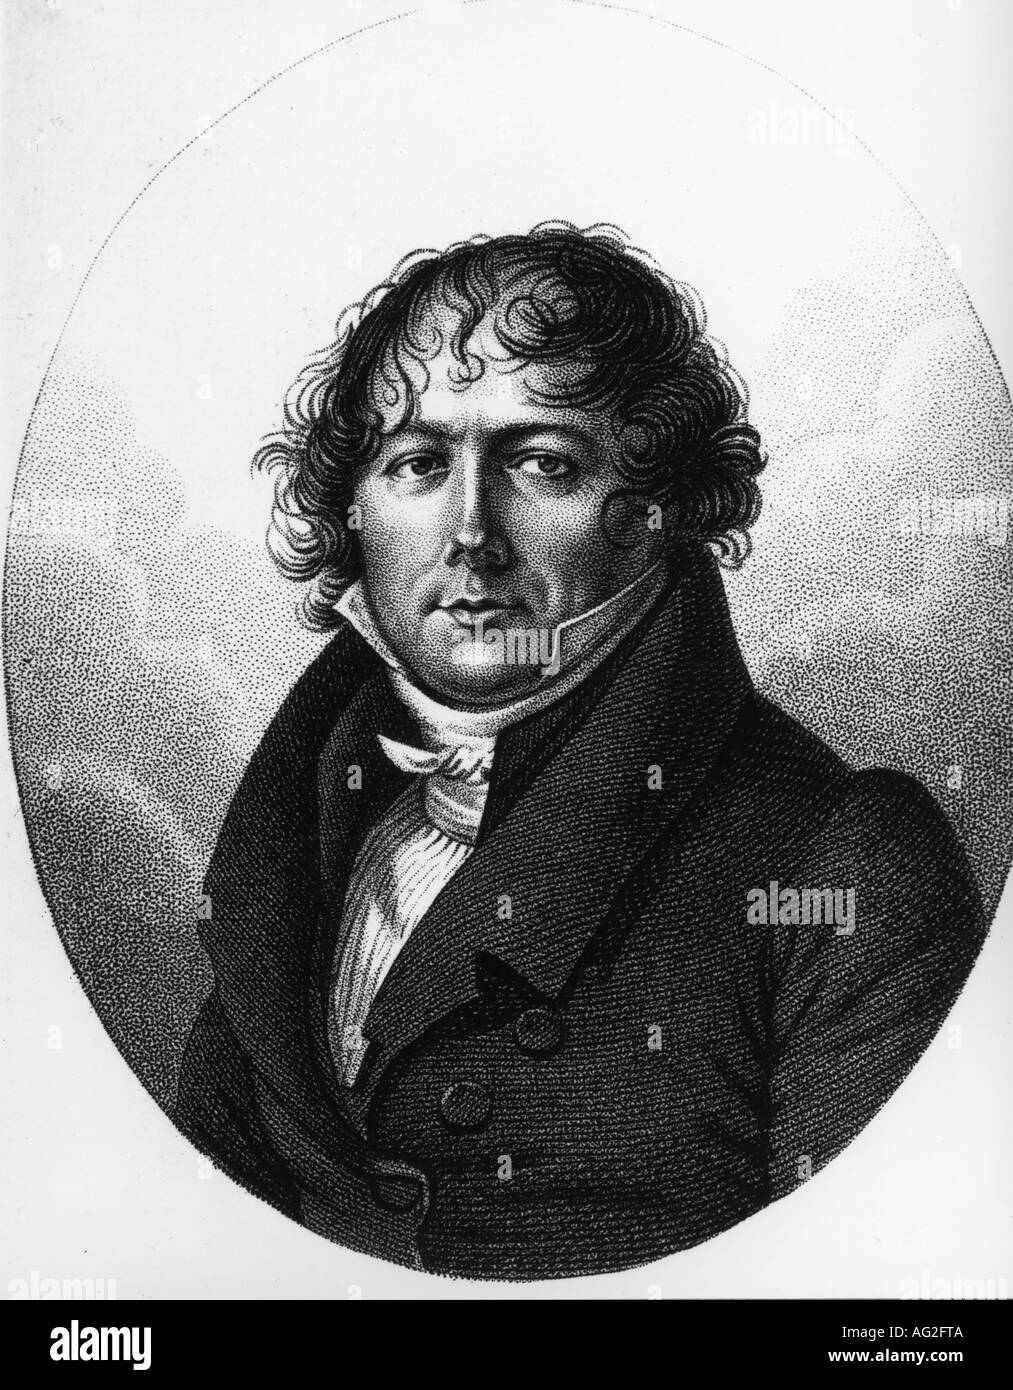 Biot, Jean-Baptiste, 21.4.1774 - 3.2.1862, French physicist, mathematician,  portrait, lithography, 19th century, scientist, Biot-Savart law, Savart  Stock Photo - Alamy